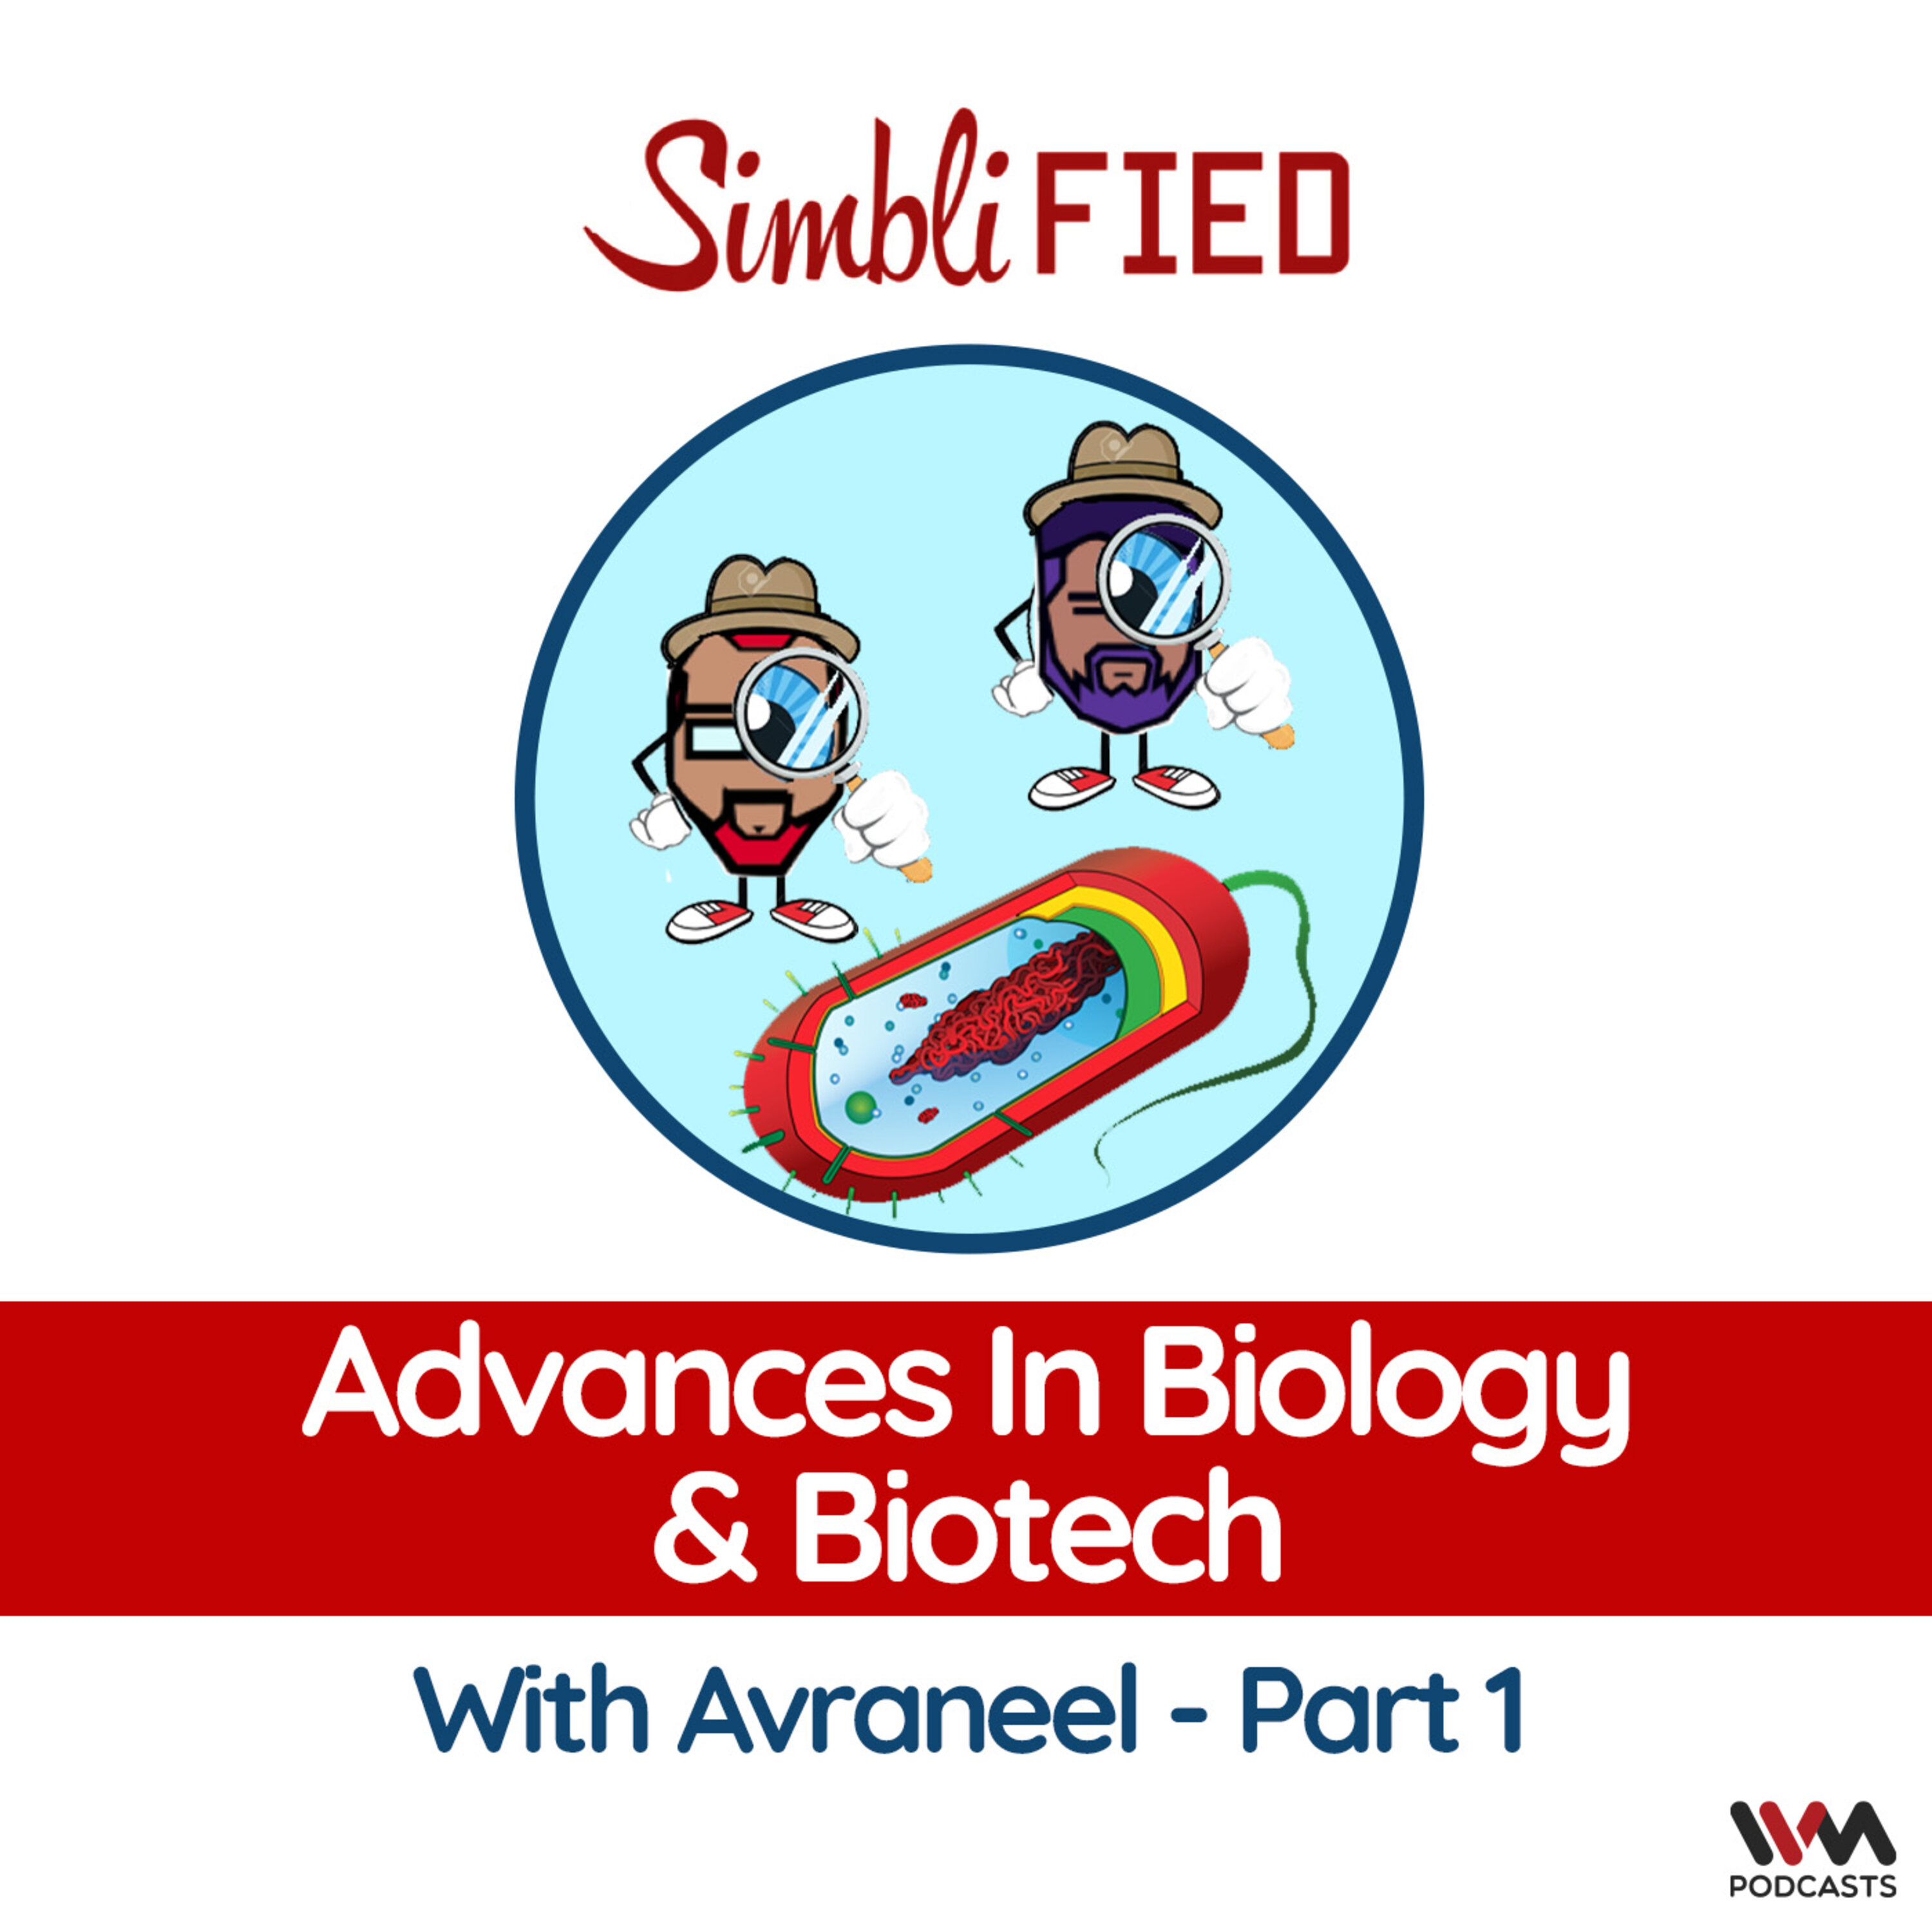 Advances in biology & biotech: With Avraneel Part 1